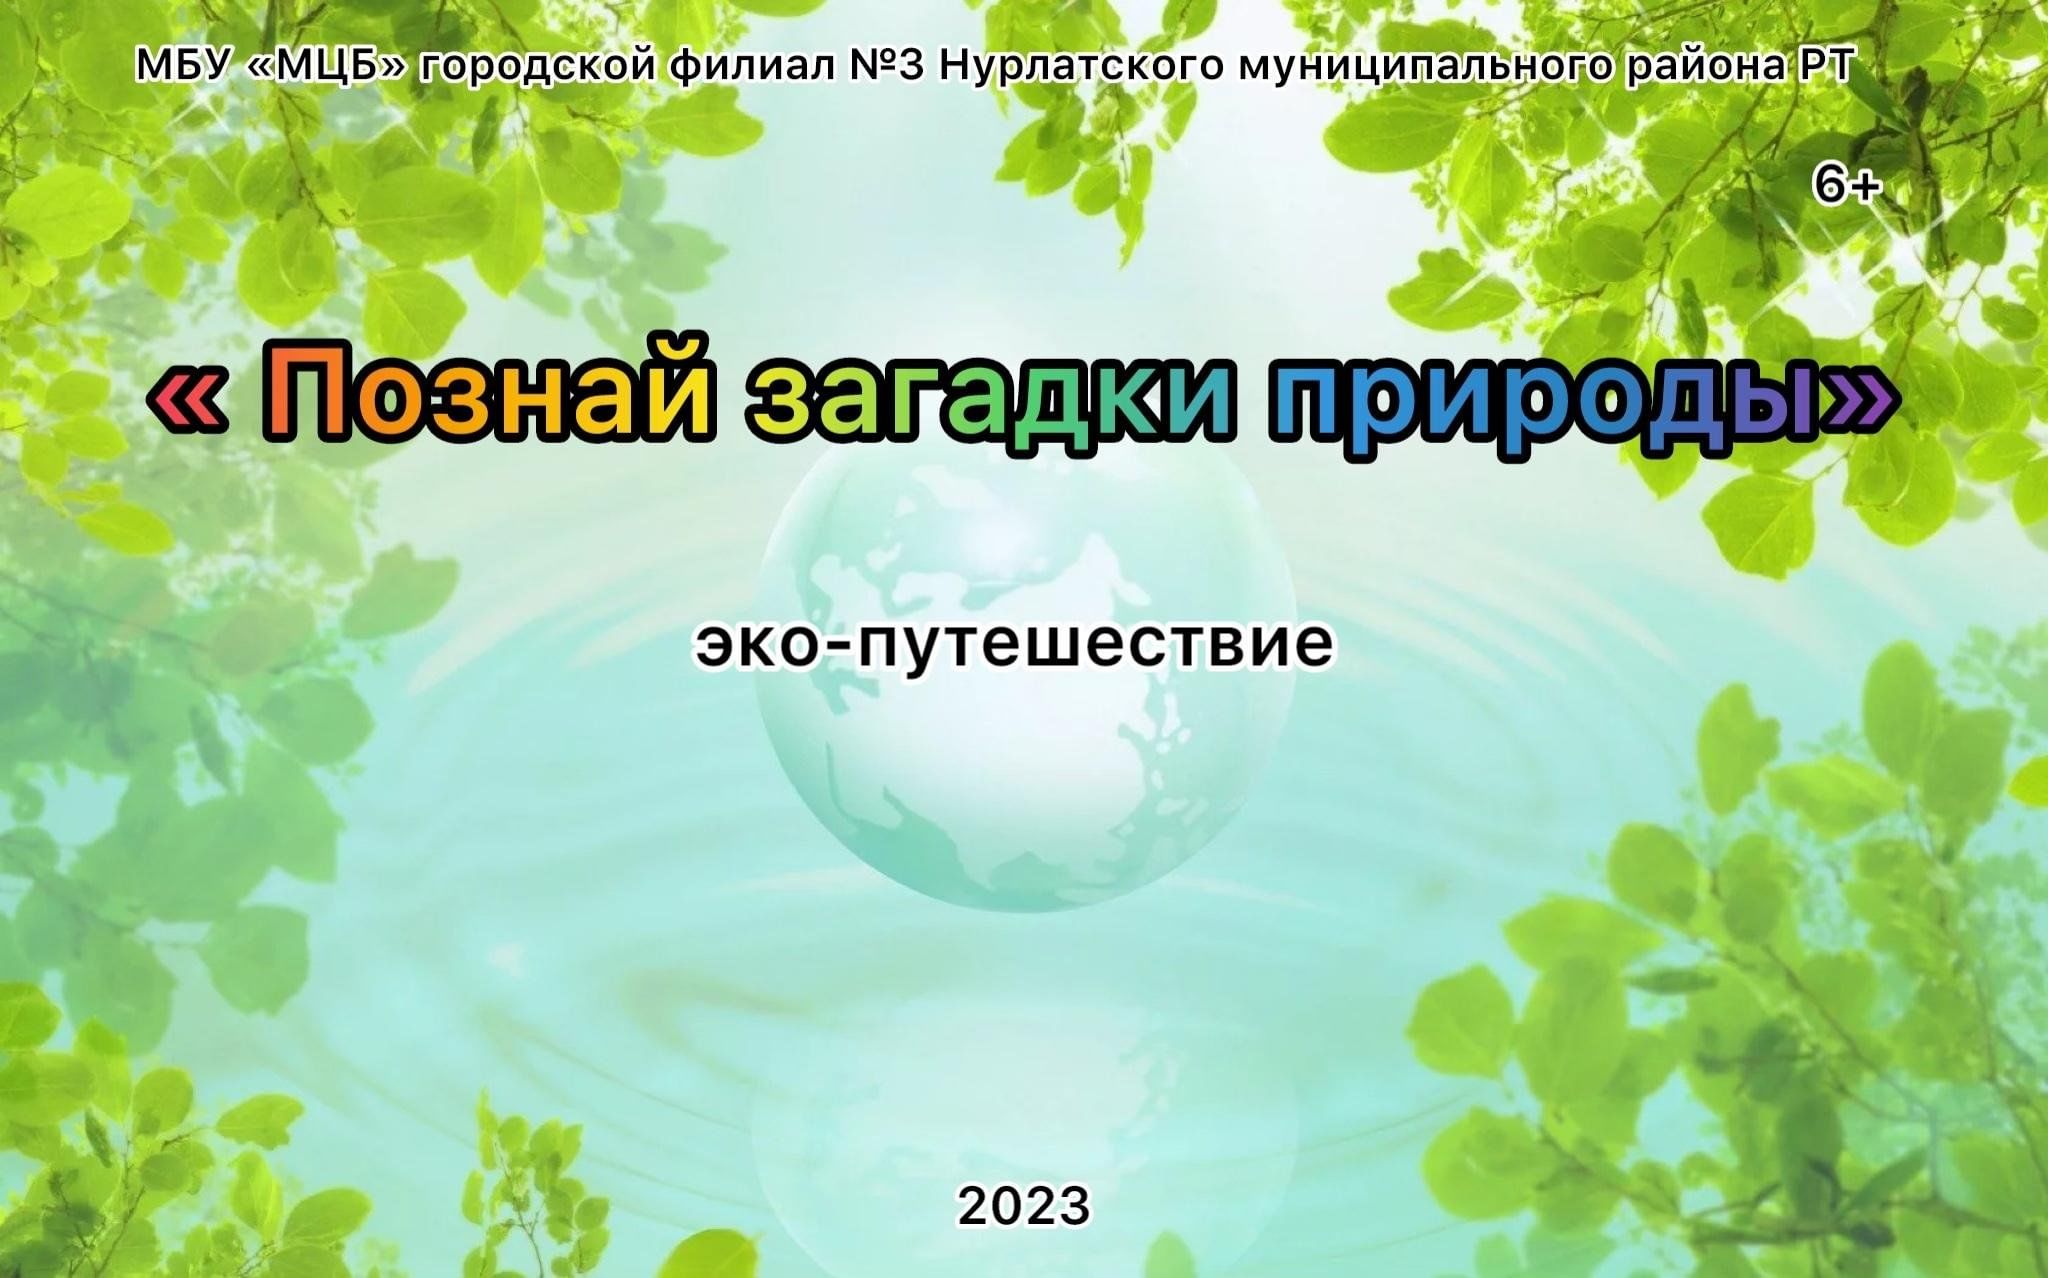 Познай загадки природы» 2023, Нурлат — дата и место проведения, программа  мероприятия.